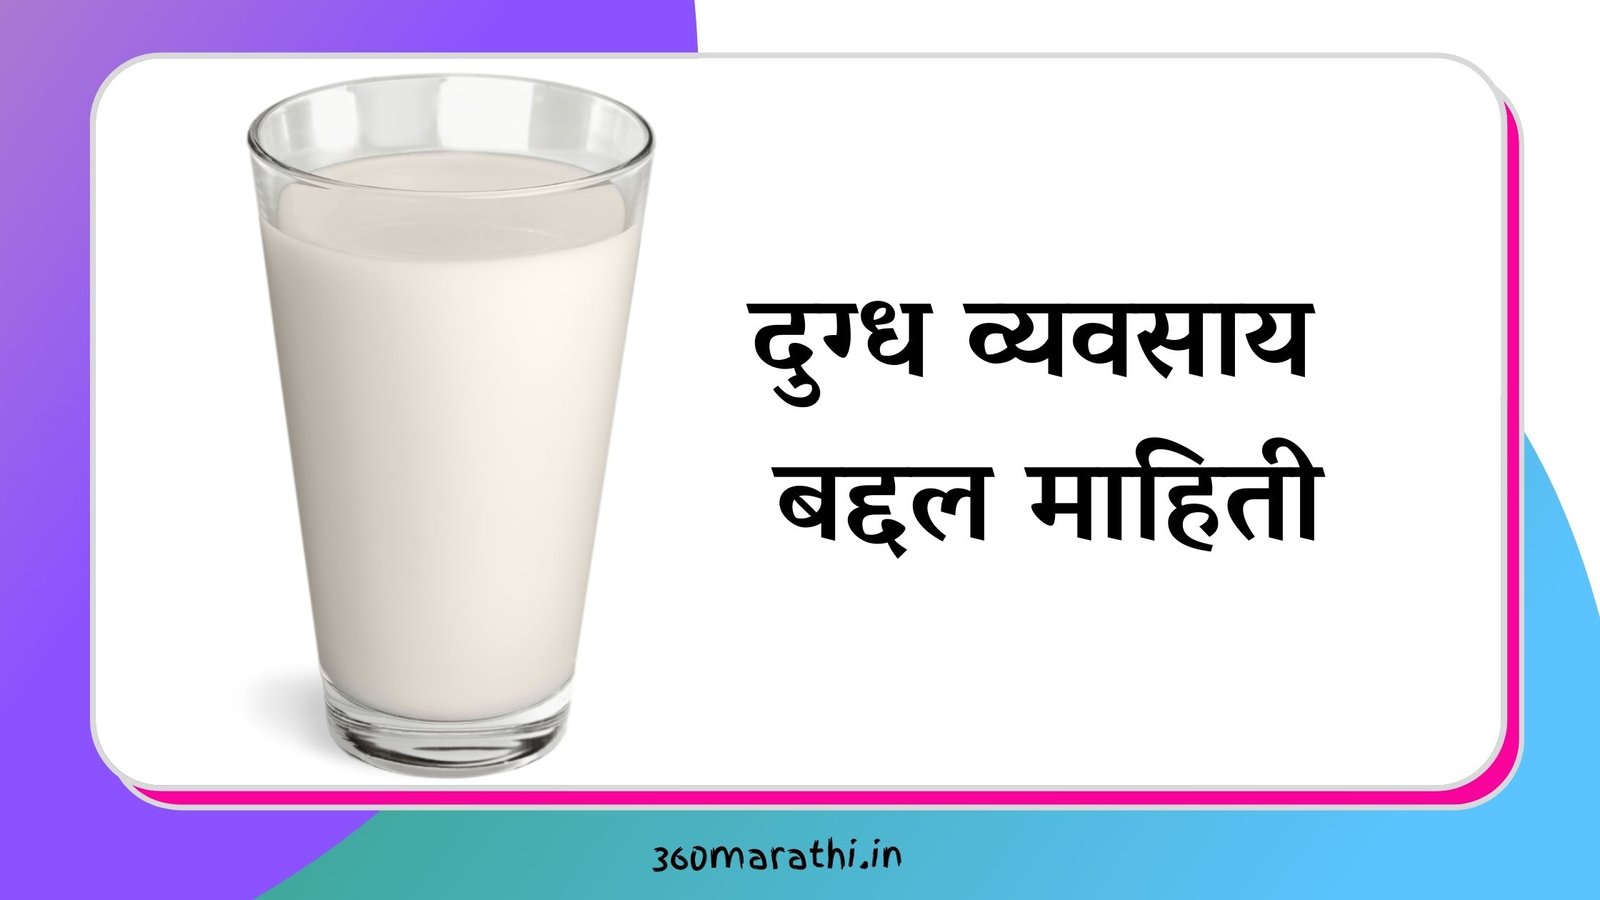 दुग्ध व्यवसाय बद्दल माहिती | Milk Business Information in Marathi